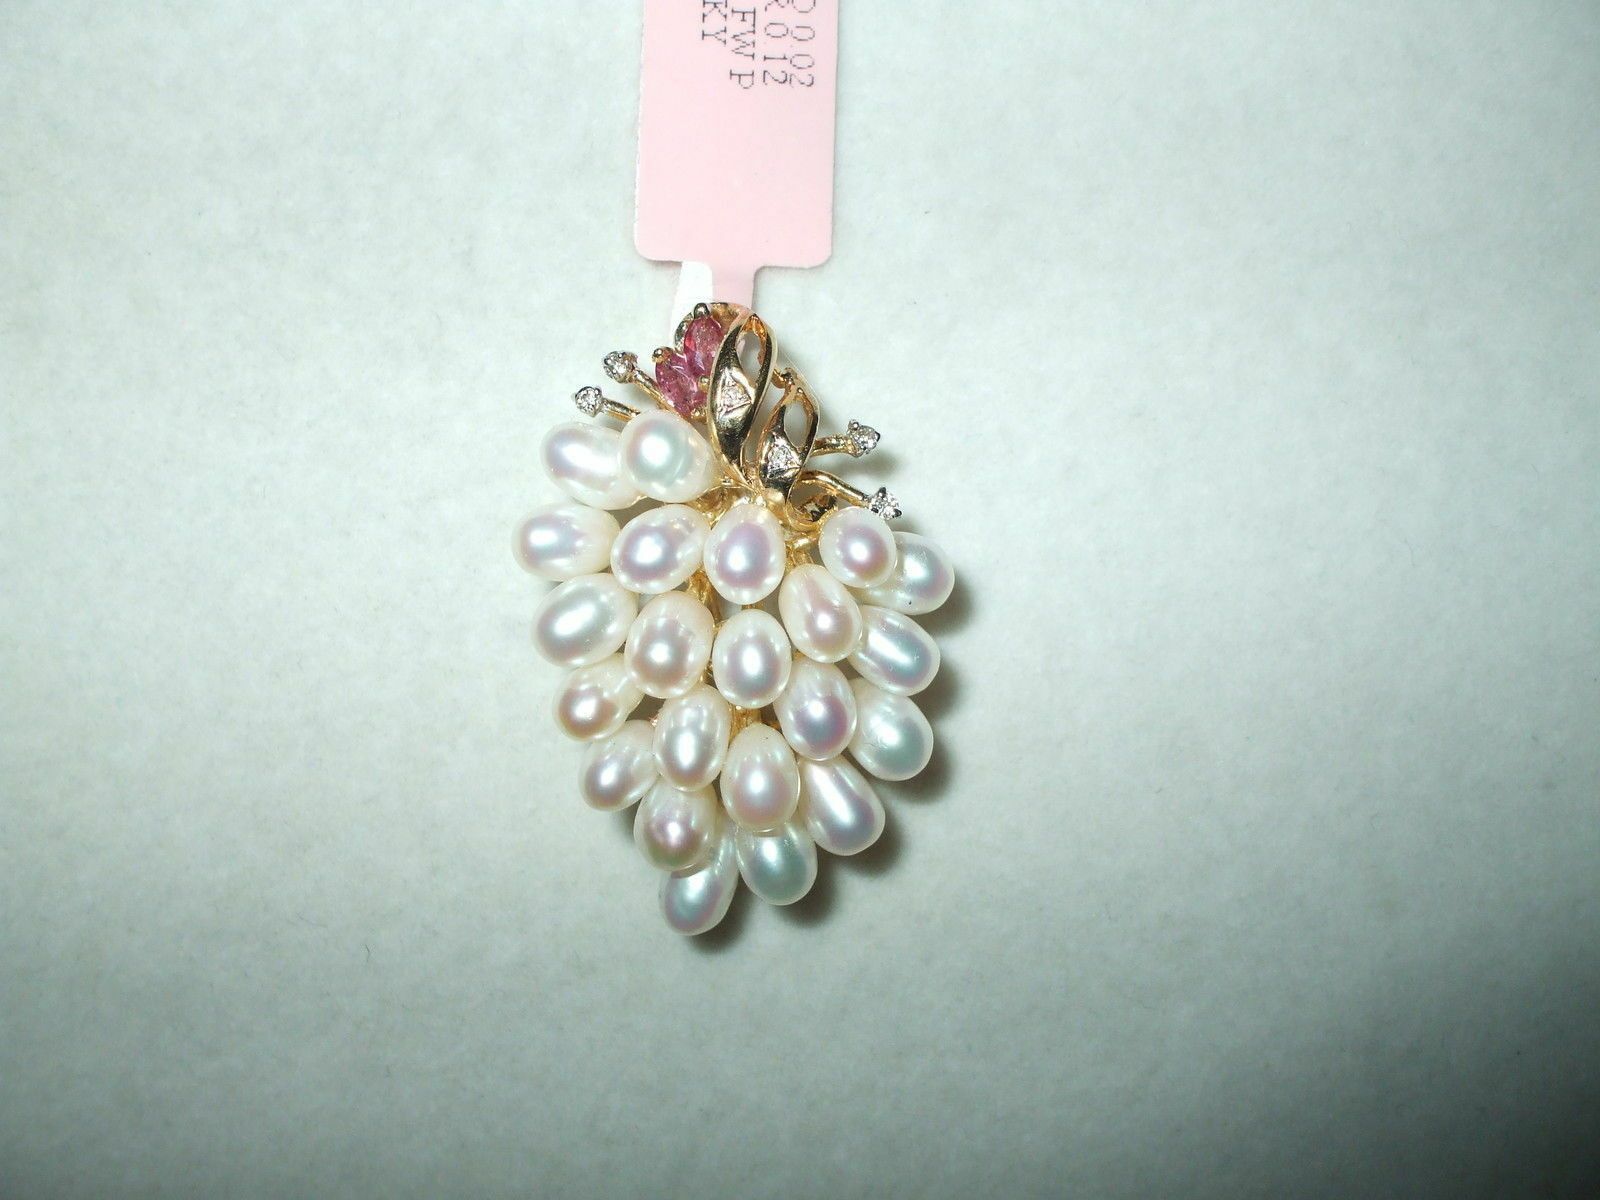 Genuine Freshwater Pearl, Ruby & Diamond Pin 14k Yellow Gold $1400